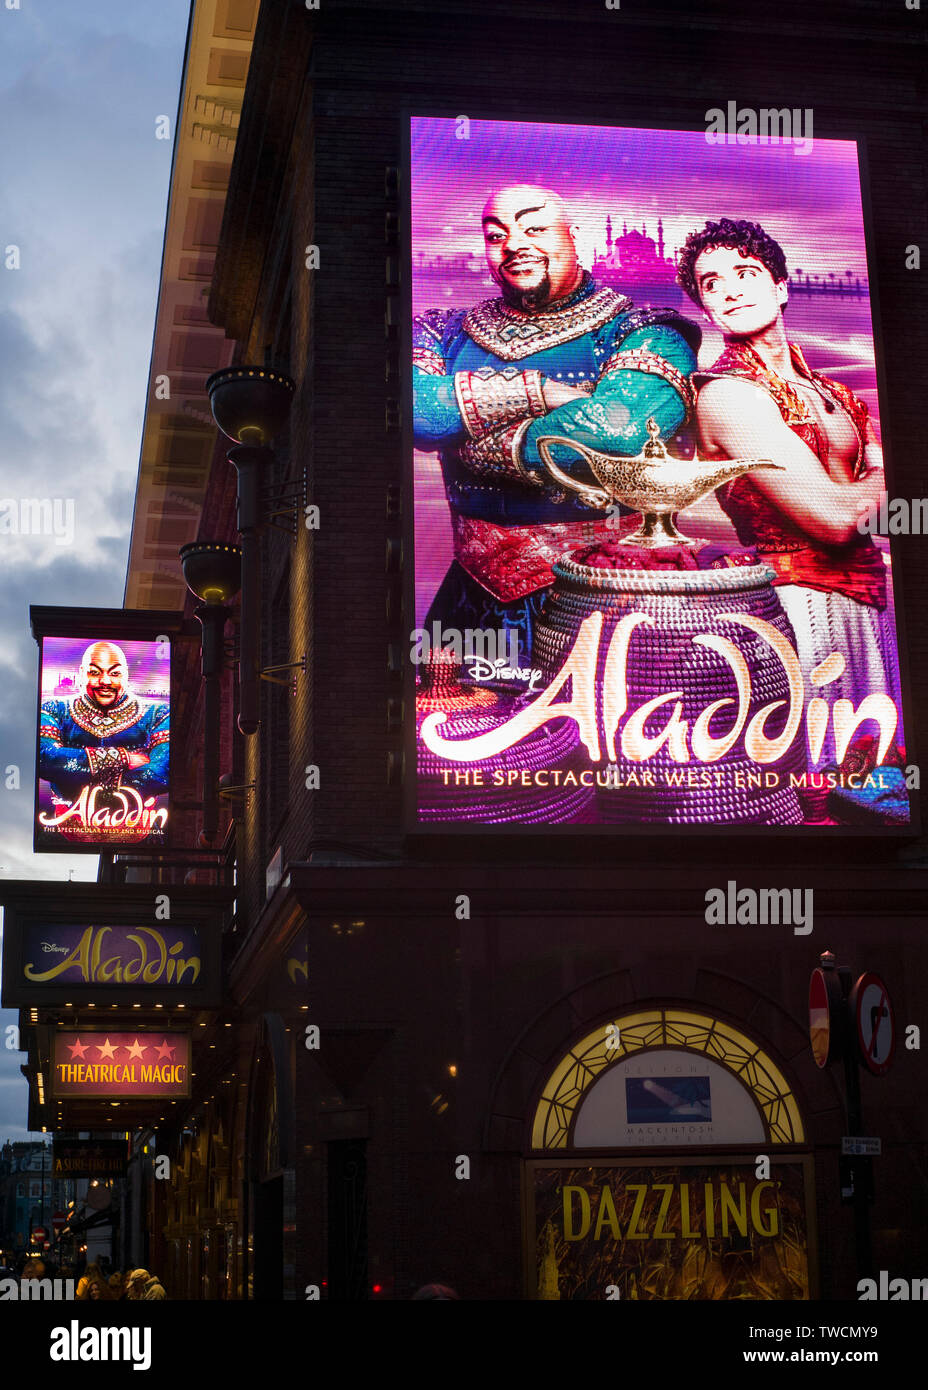 Aladin west end musical signage su Prince Edward Theatre in Old Compton Street, Soho, London REGNO UNITO Foto Stock